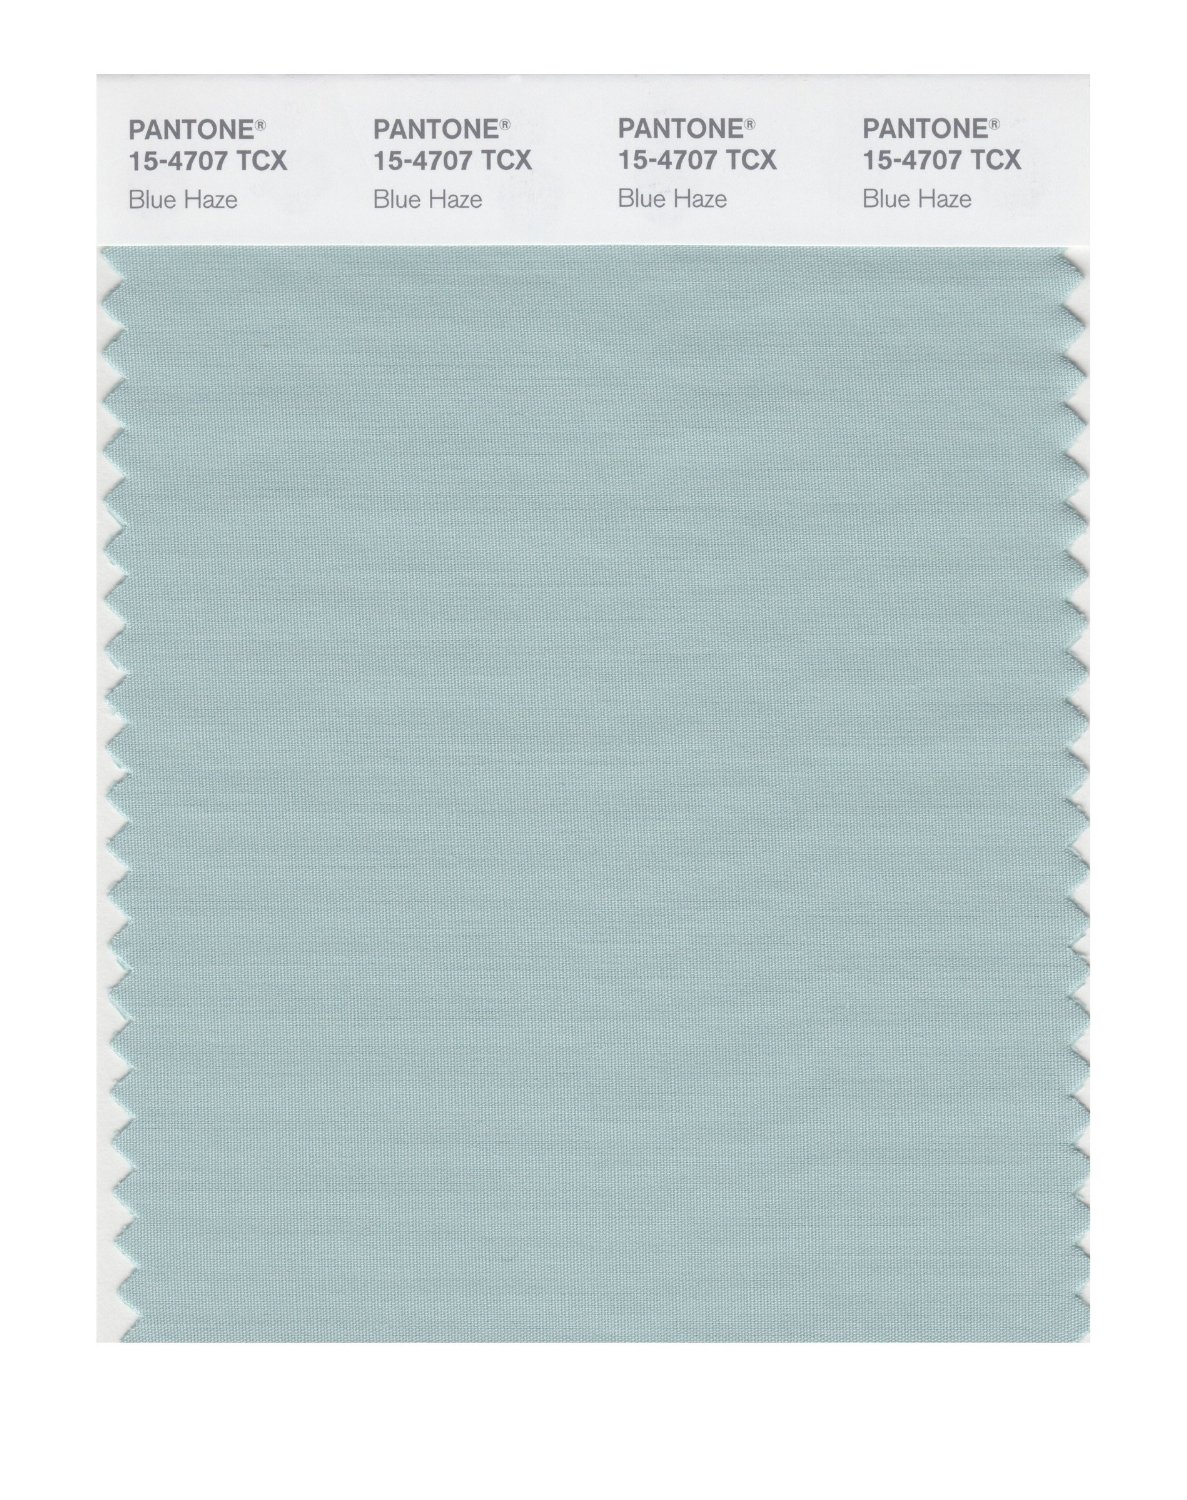 Pantone Cotton Swatch 15-4707 Blue Haze